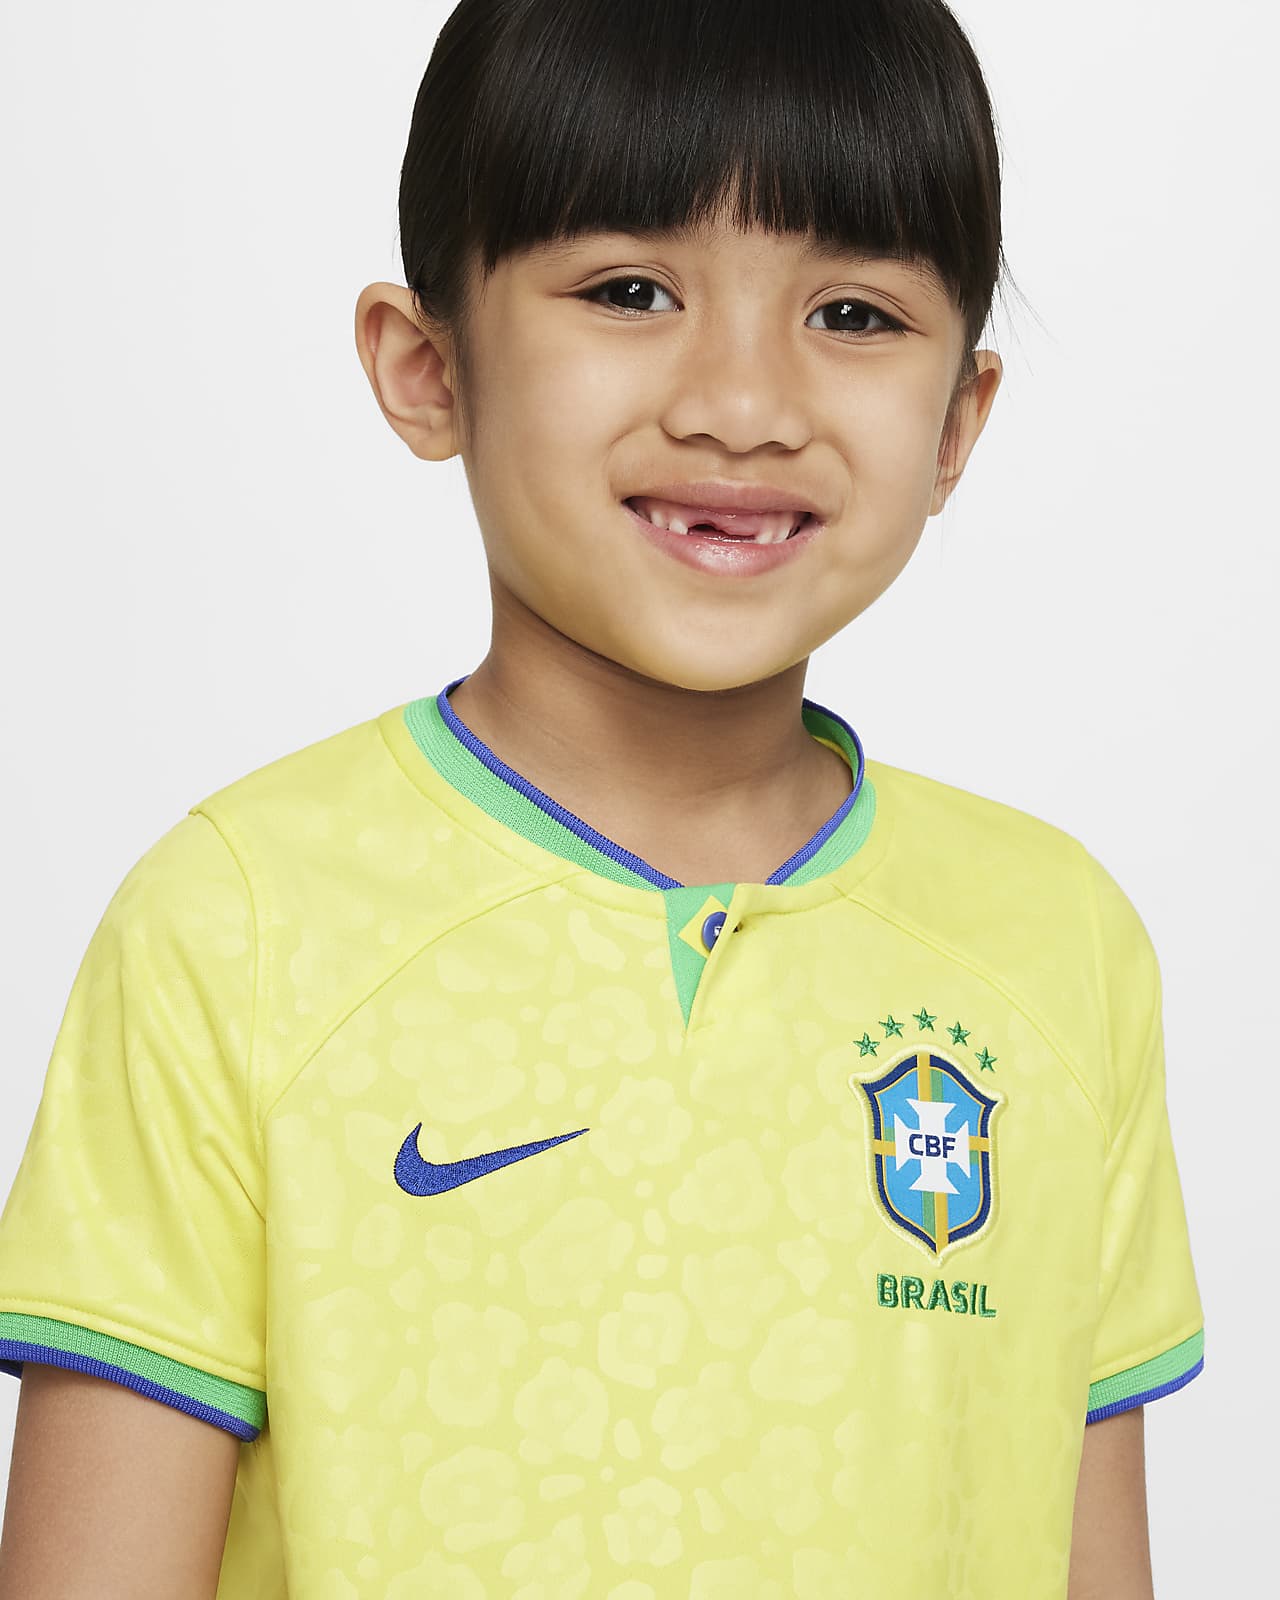 2022/23 Home Younger Kids' Nike Dri-FIT Football Shirt. Nike ID